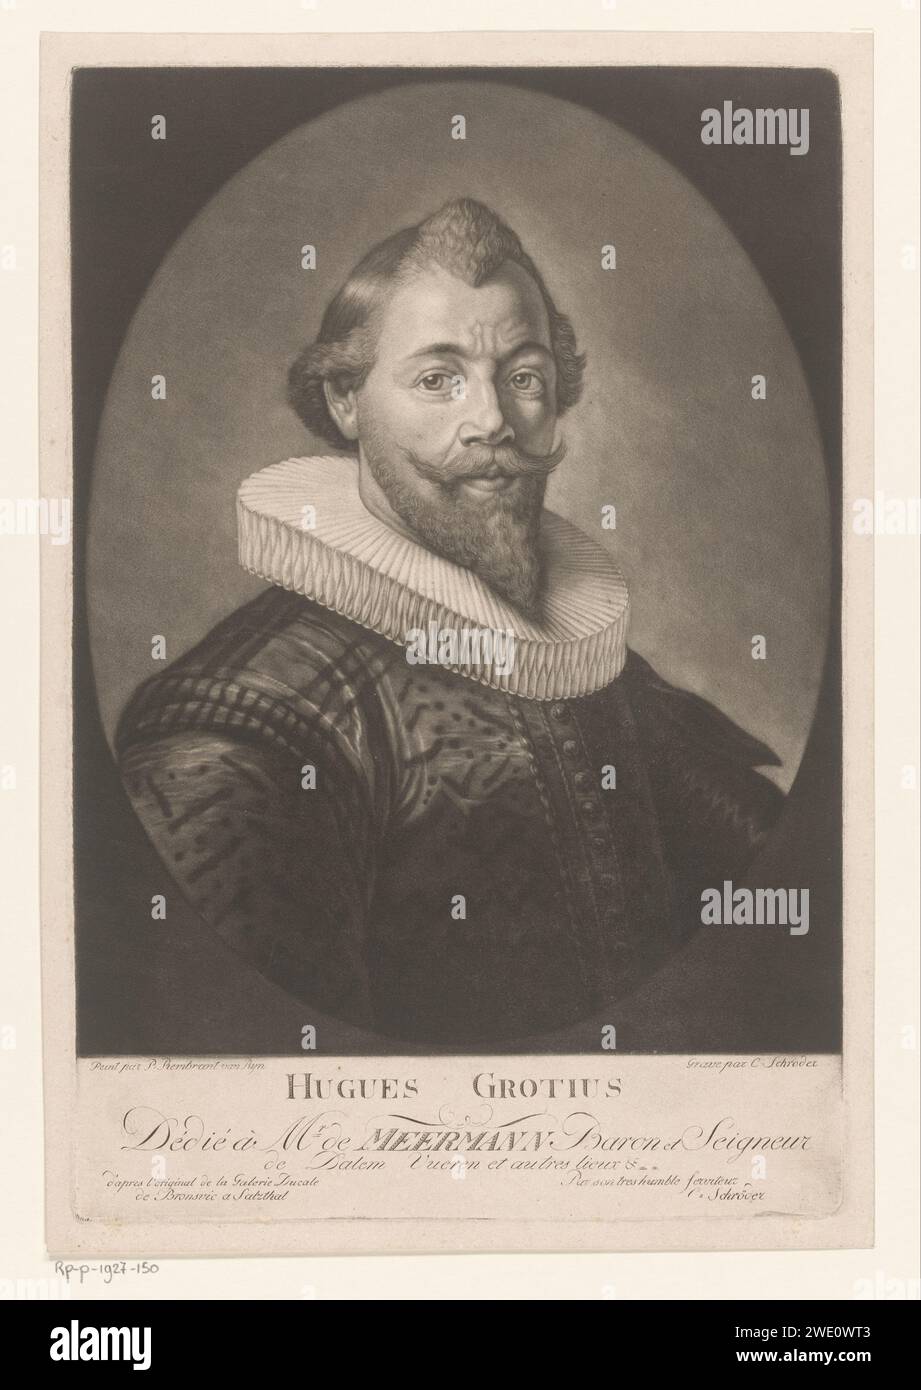 Porträt von Hugo de Groot, C. Schröder, nach Rembrandt van Rijn, 1763 - 1815 Druckpapier historische Personen Stockfoto